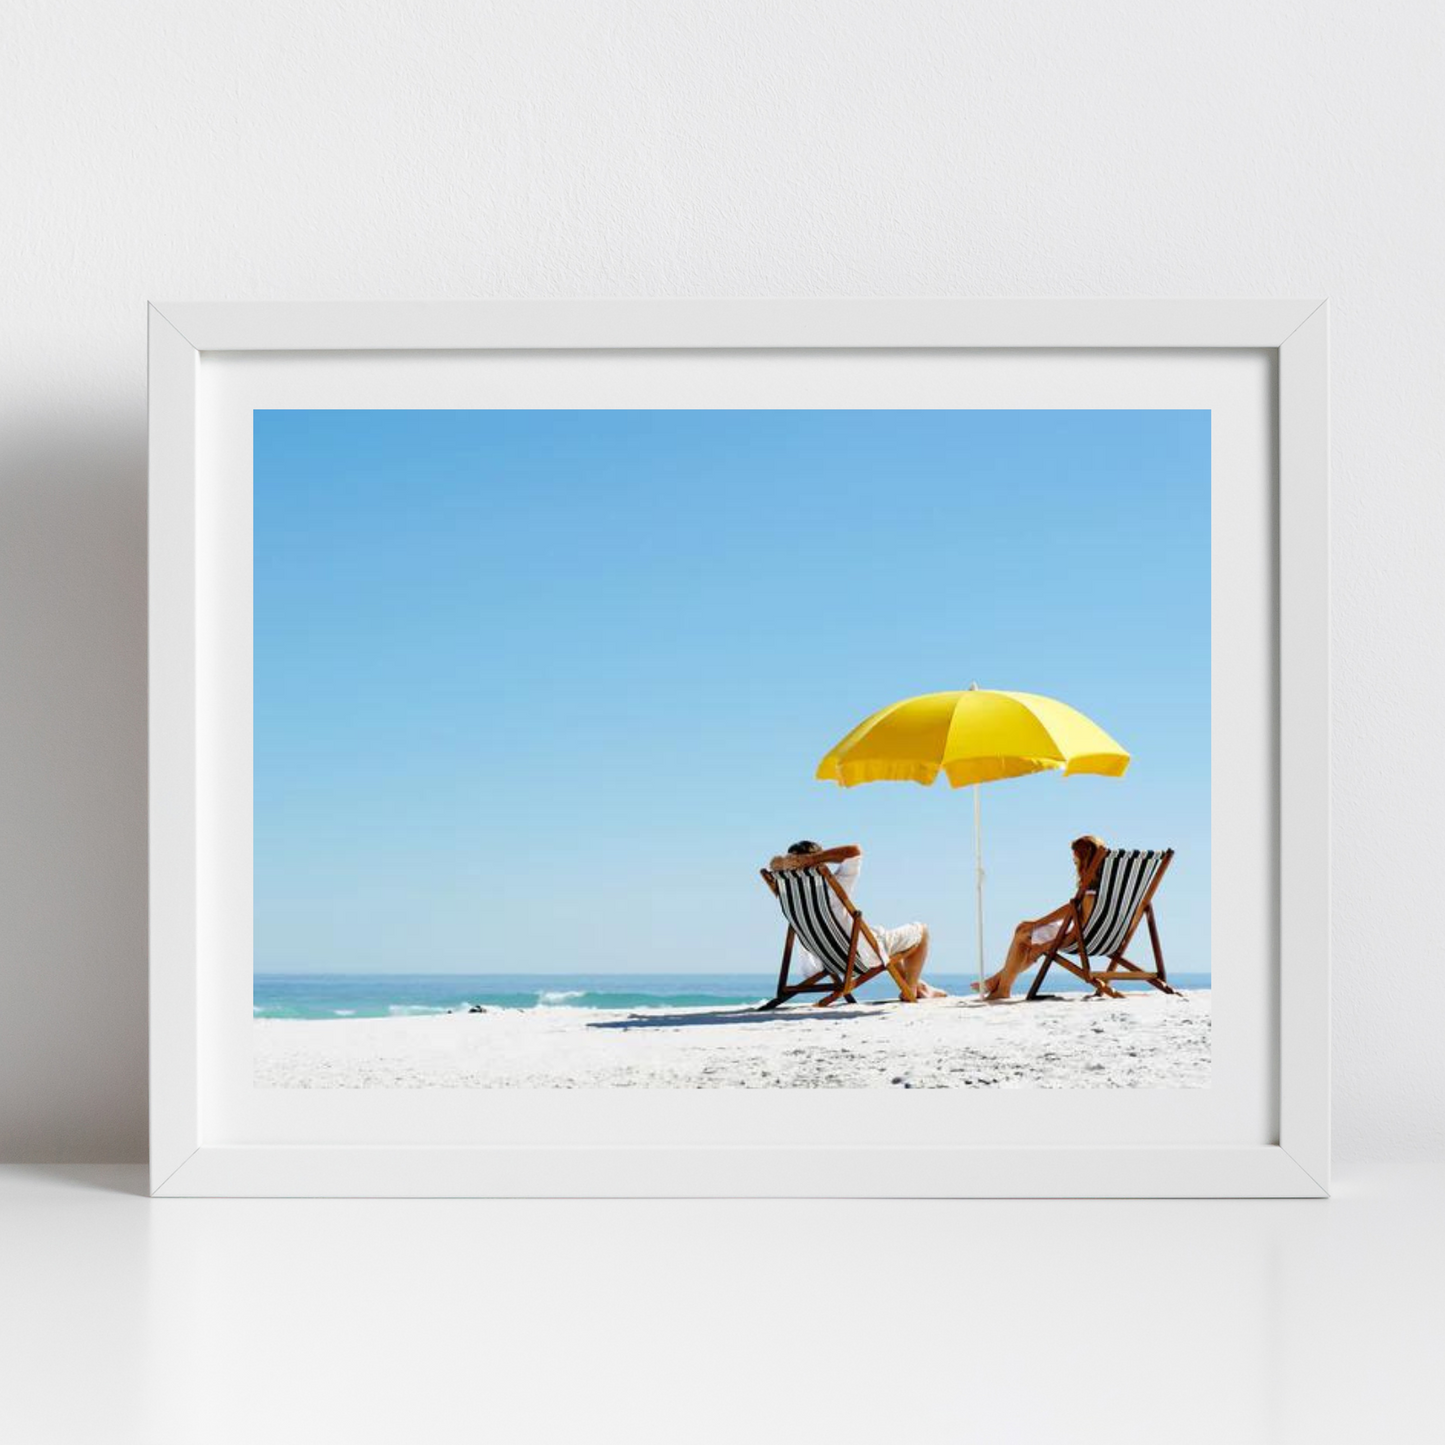 Beach summer umbrella